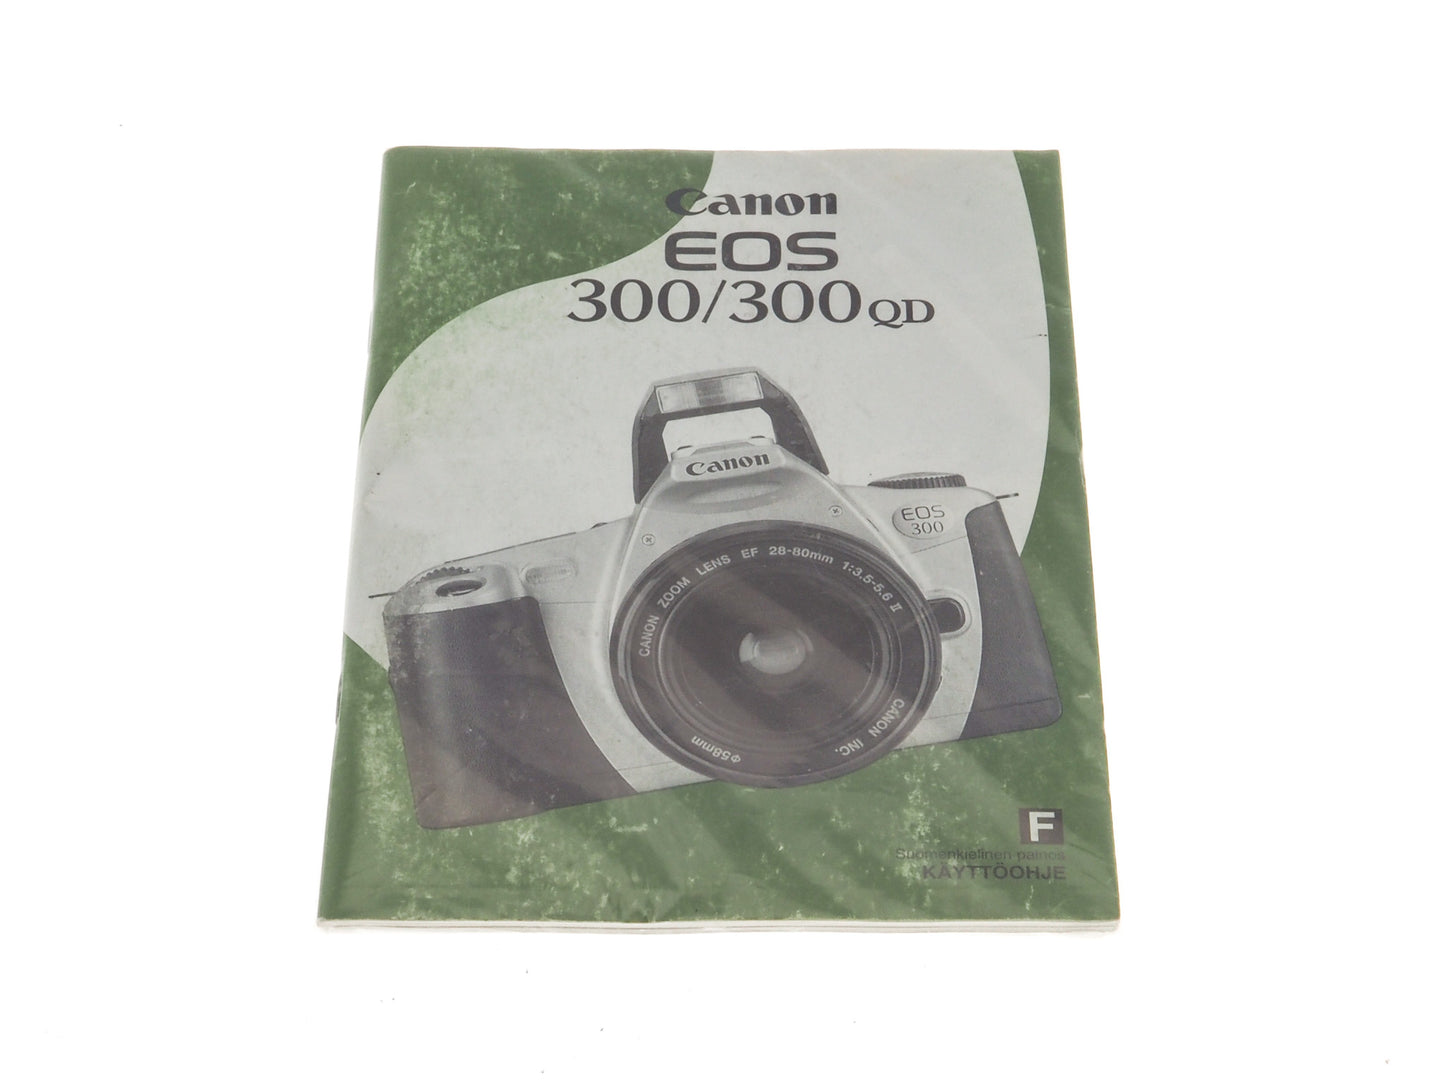 Canon EOS 300/300 QD Instructions - Accessory